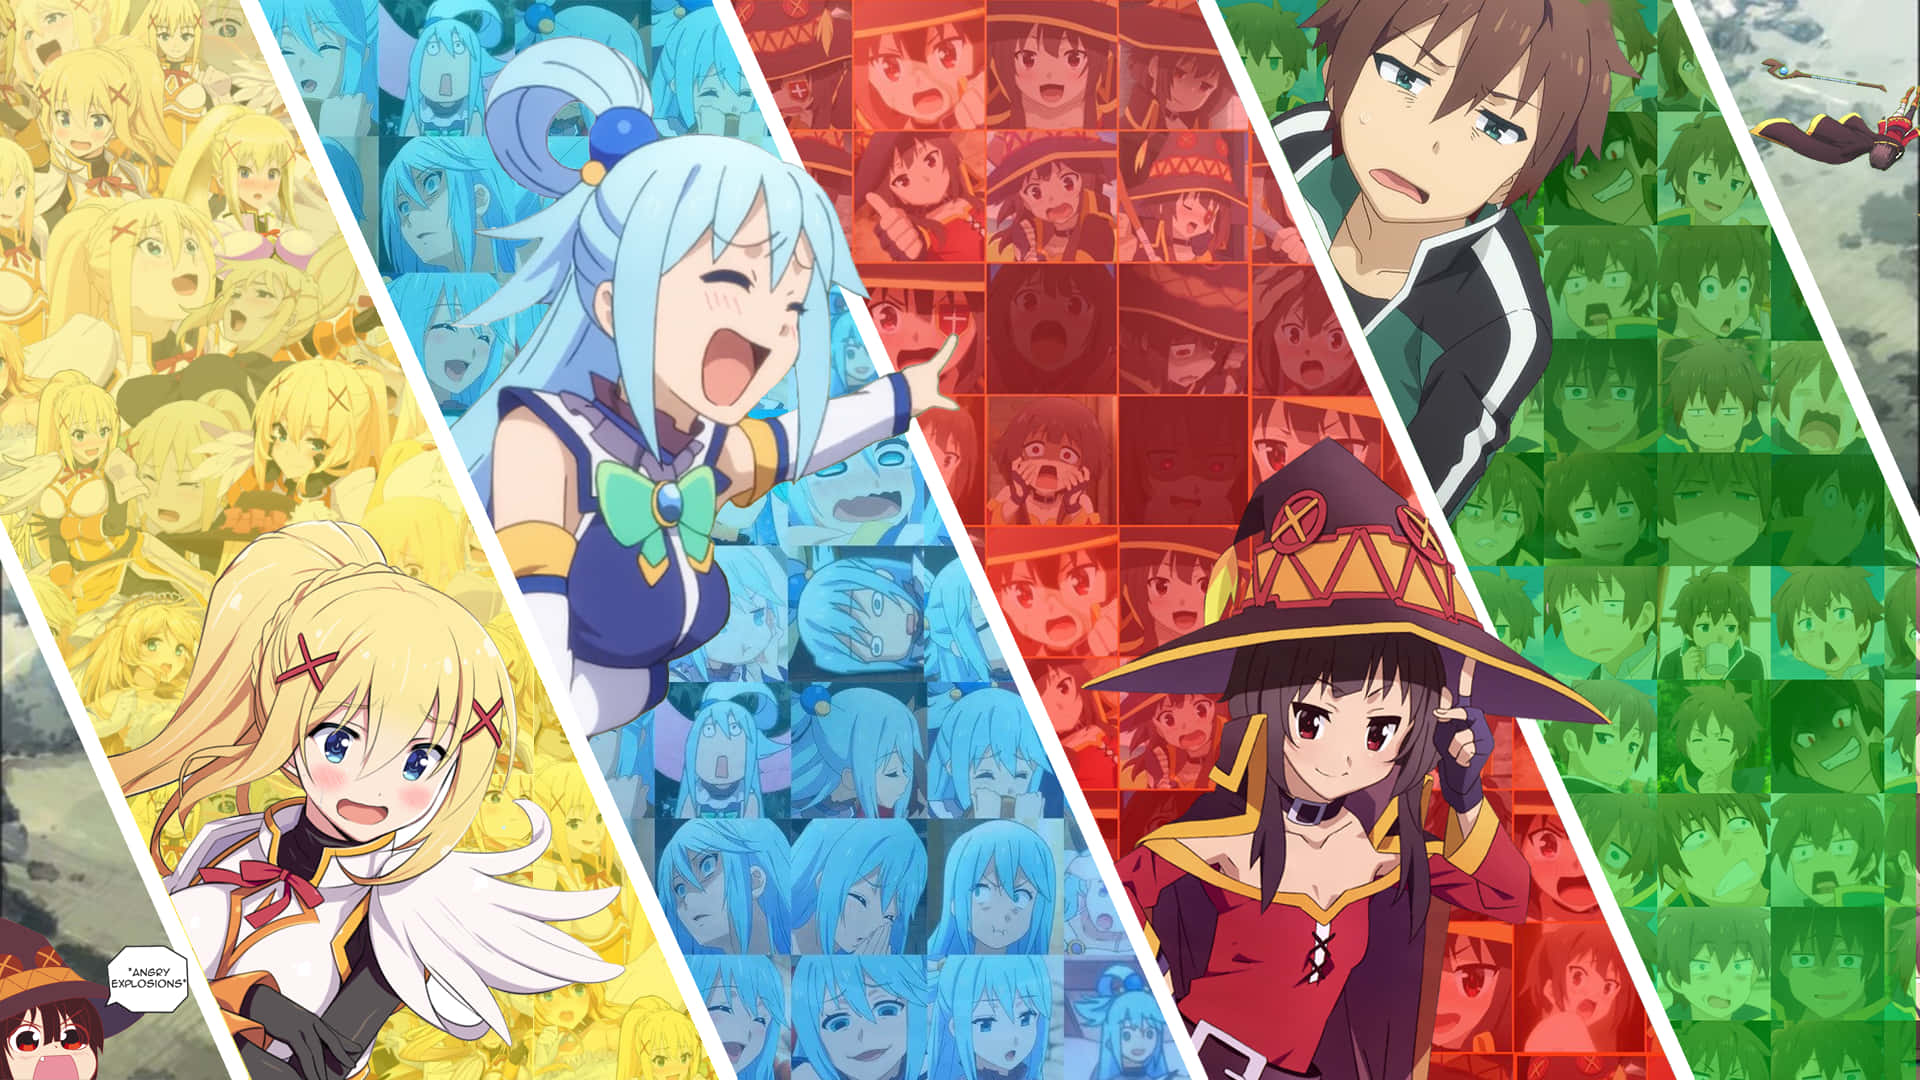 Download “Kazuma, Aqua & Megumin Trek Together Through Fairyland